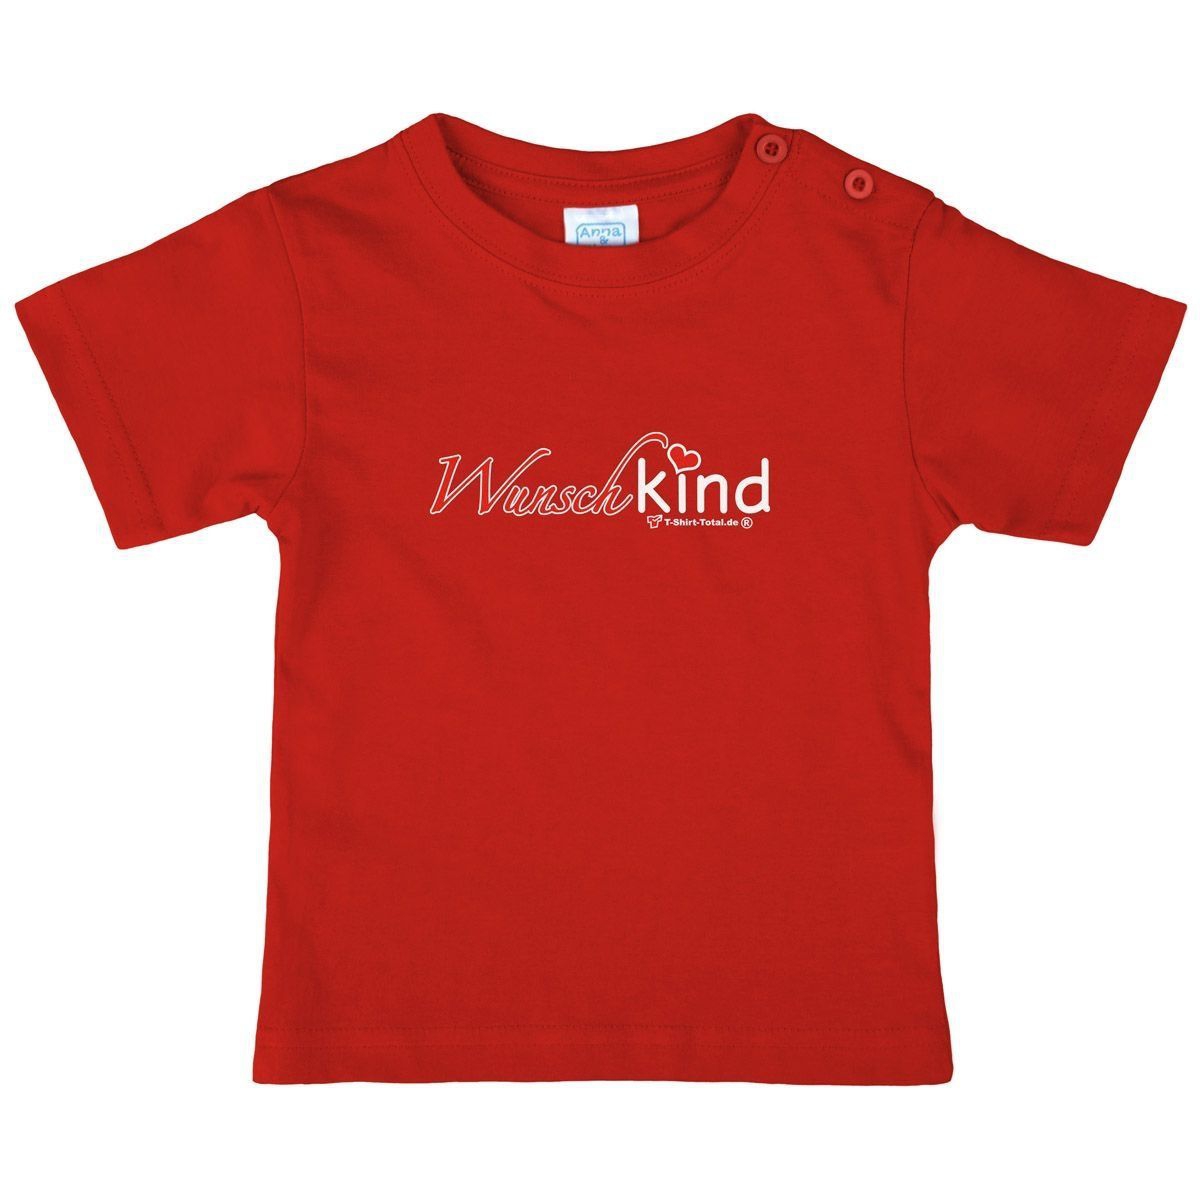 Wunschkind Kinder T-Shirt rot 56 / 62